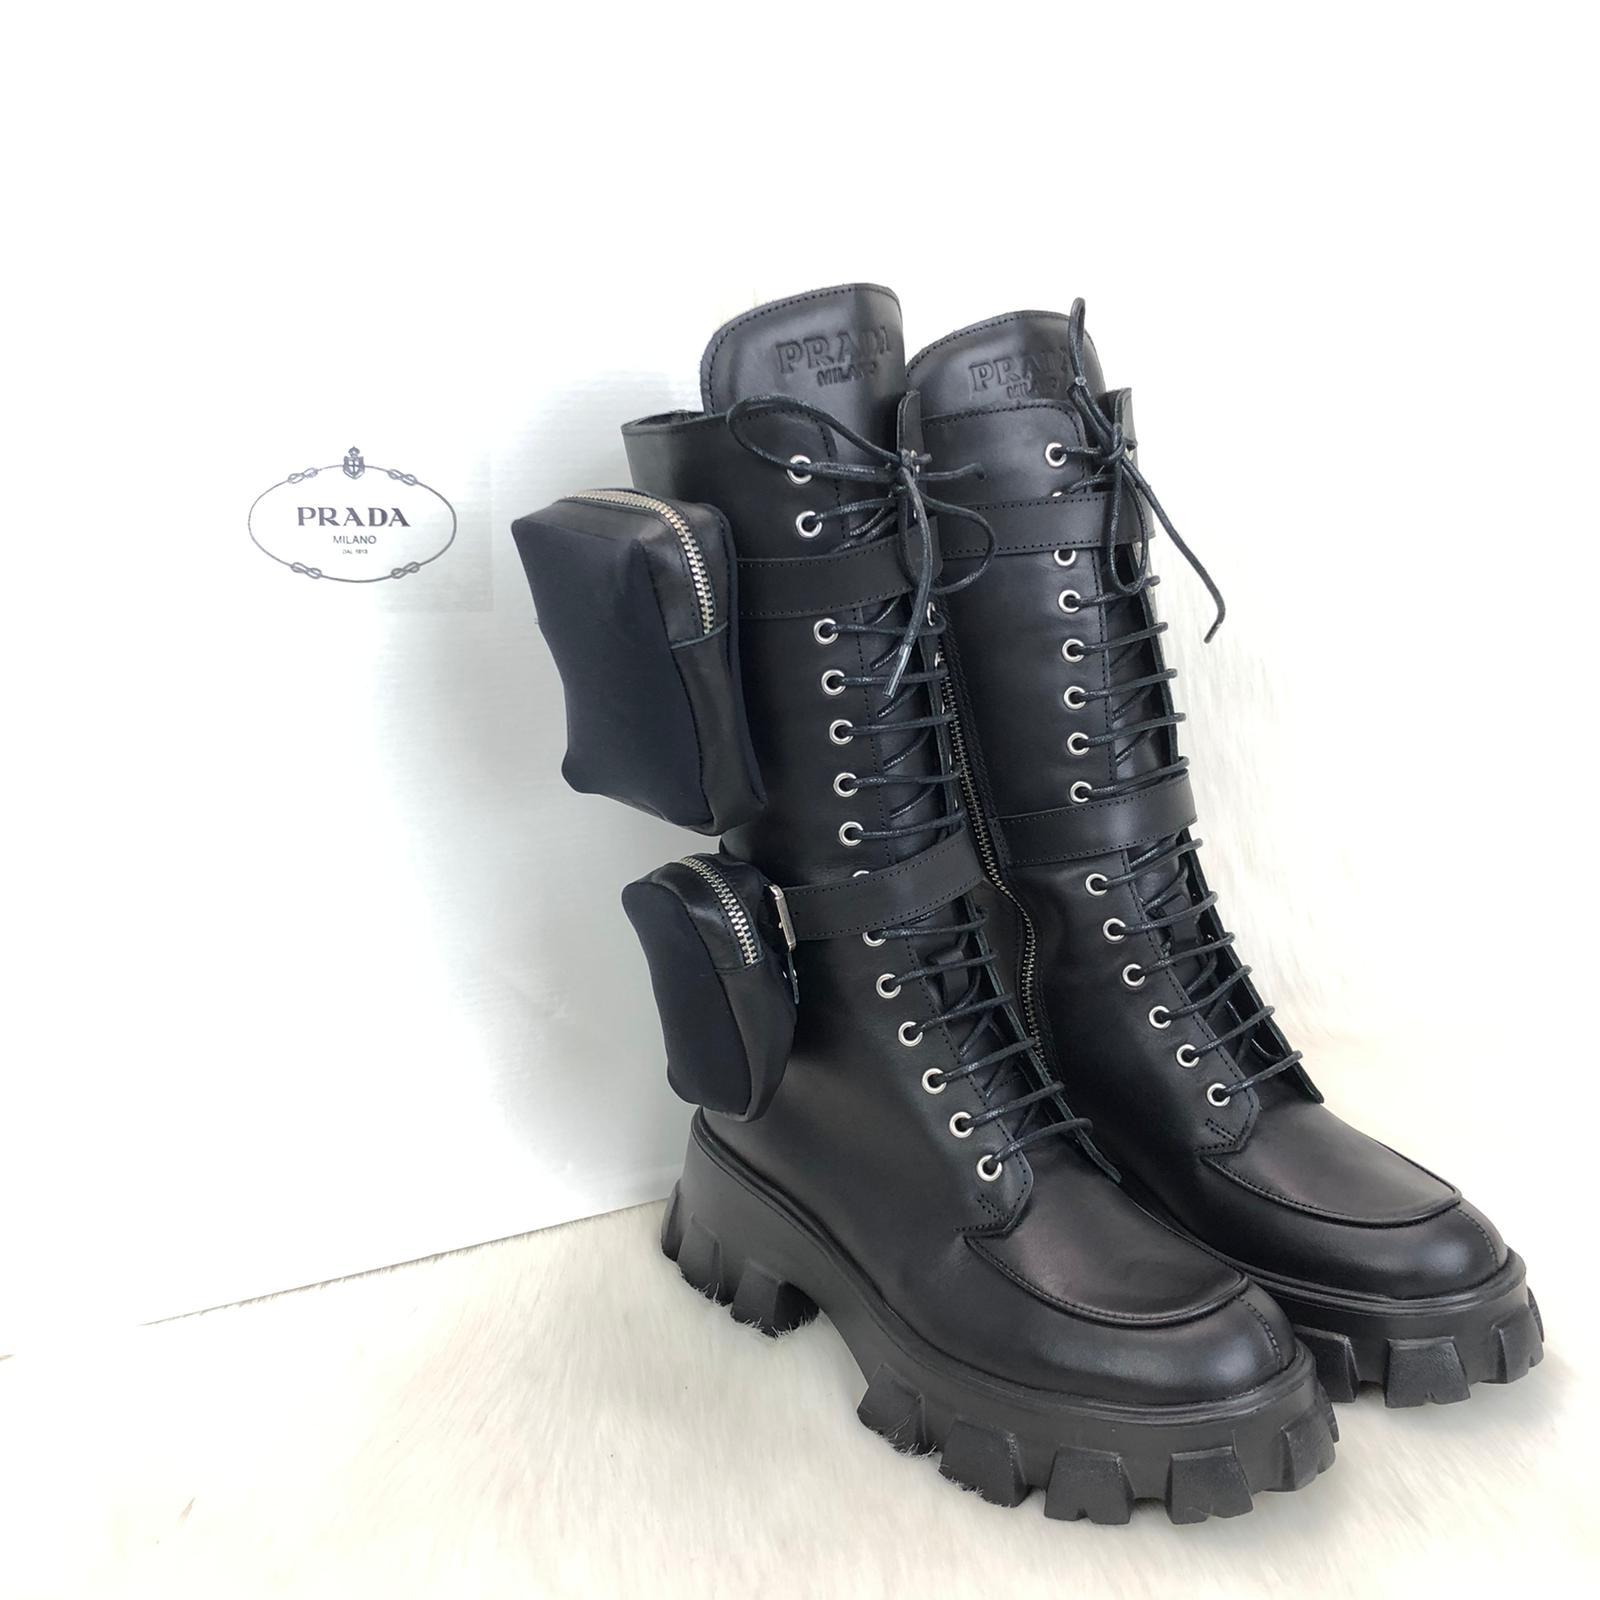 prada boots review